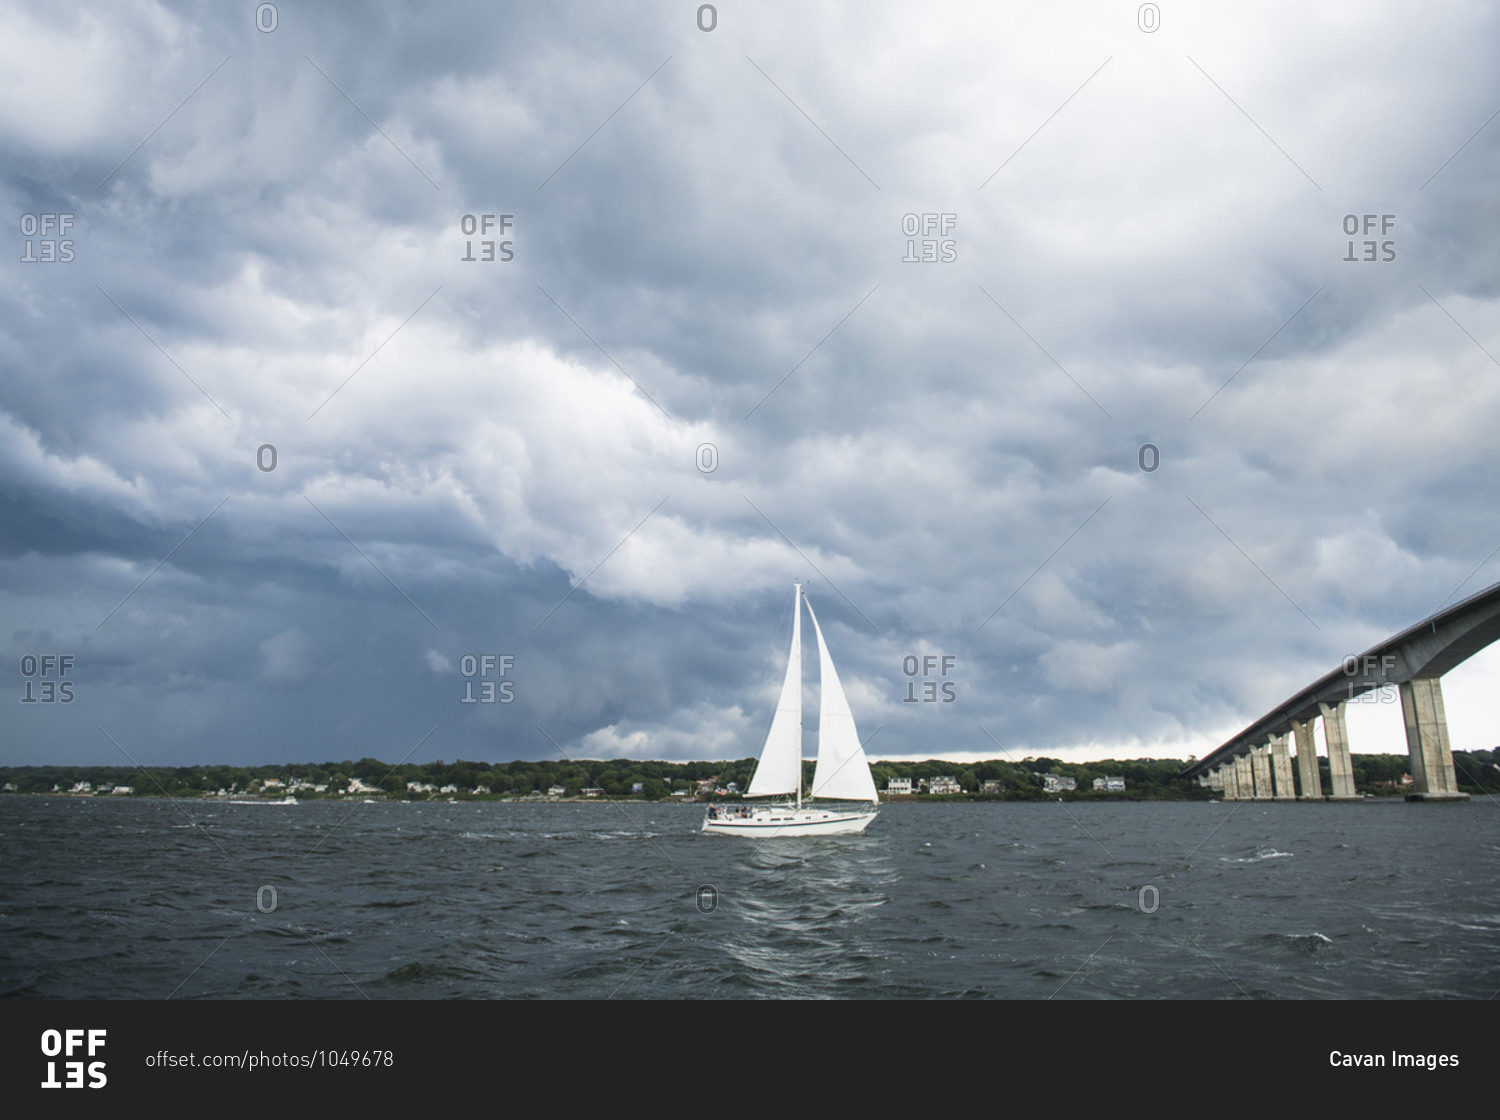 Dark storm encompassing boat on the ocean stock photo -
OFFSET